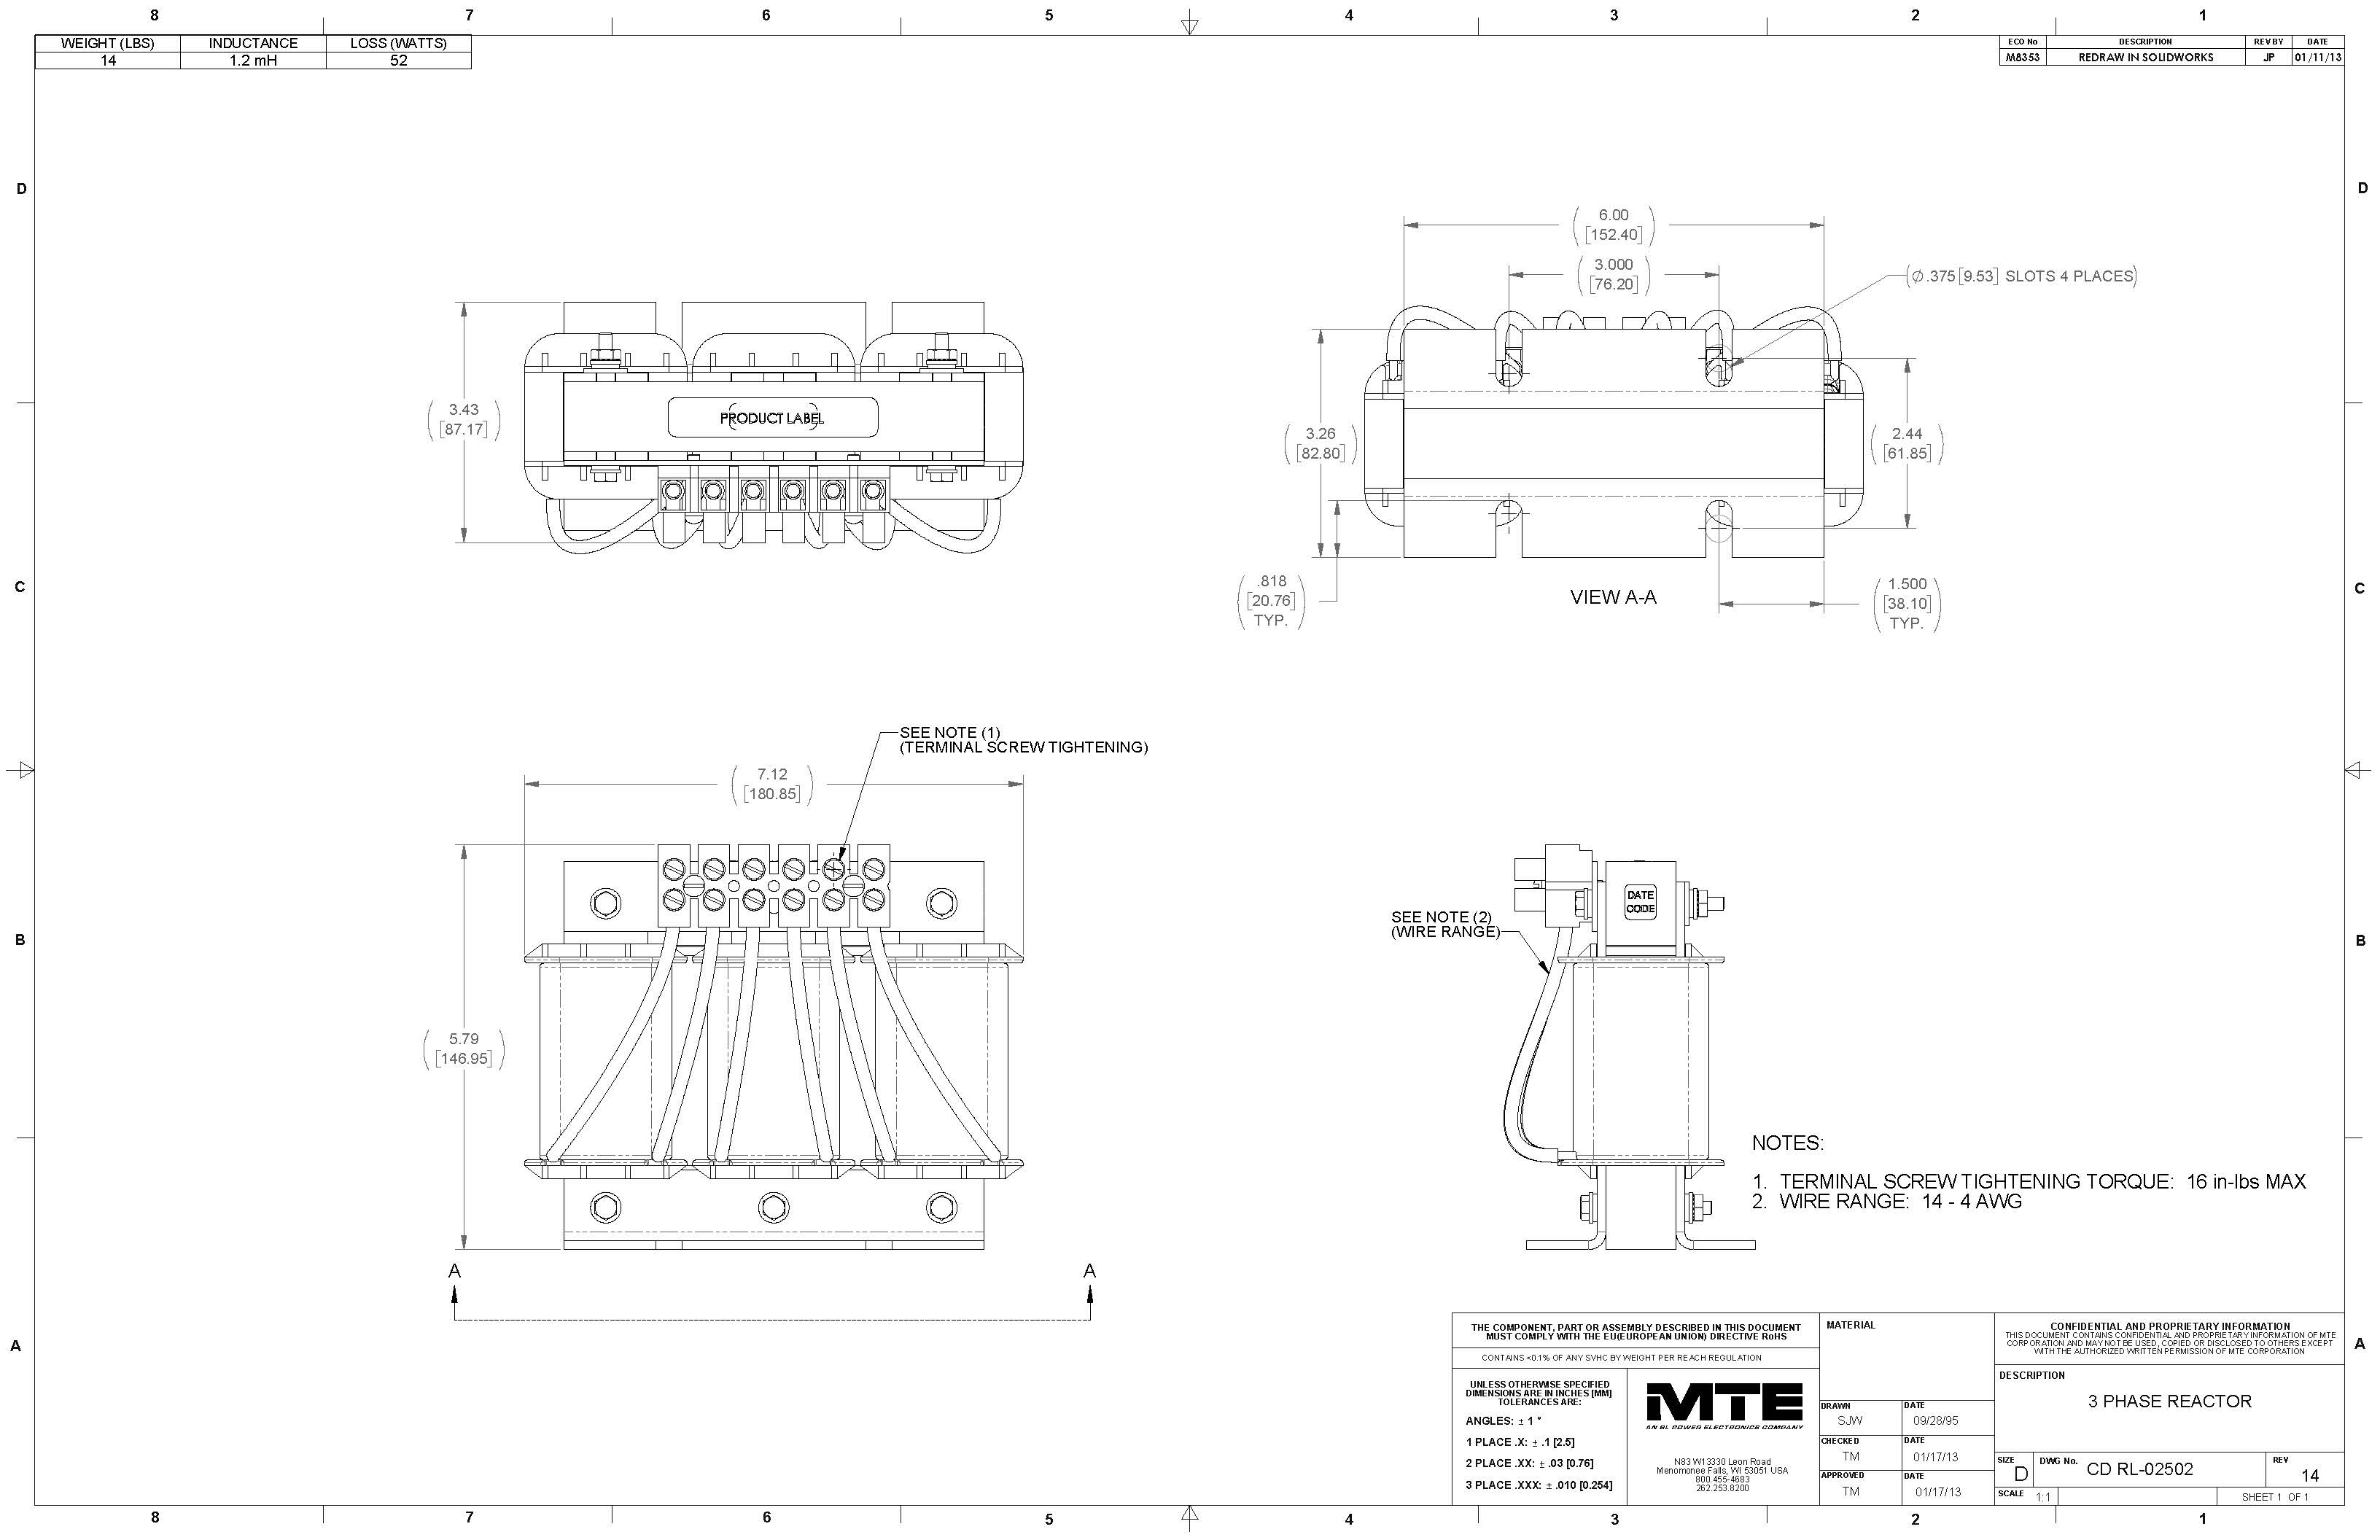 rl-02502 | MTE Corporation